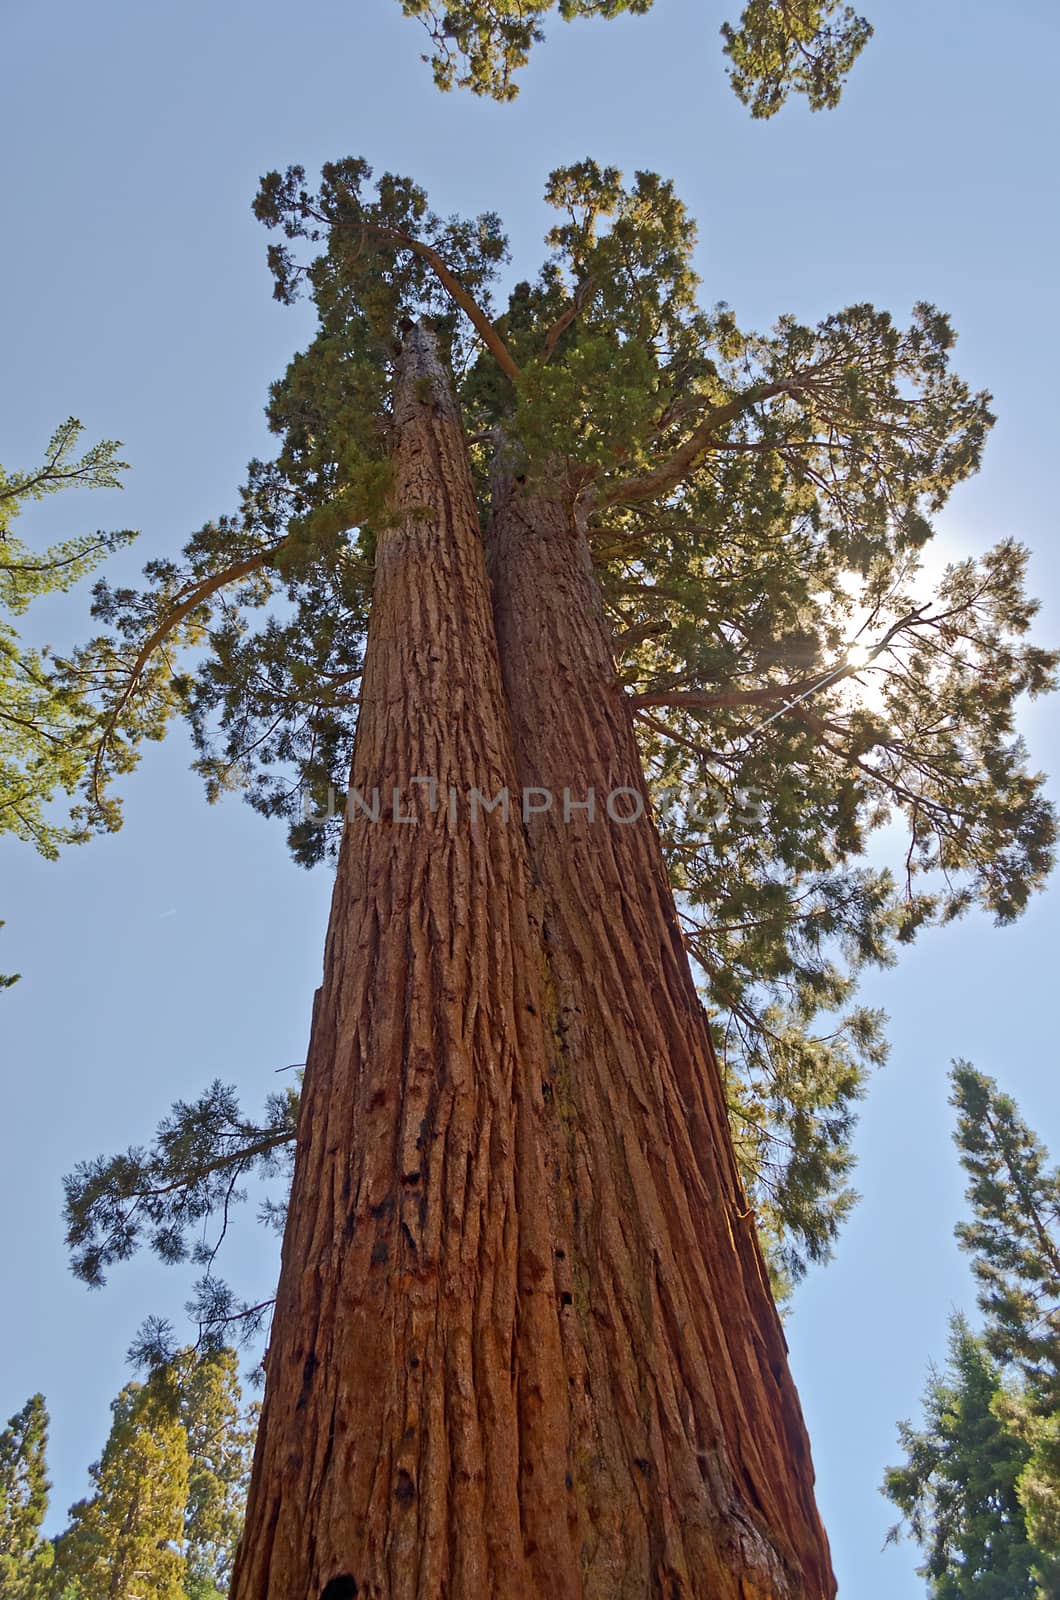 Giant Sequoias in Yosemite National Park, USA by marcorubino